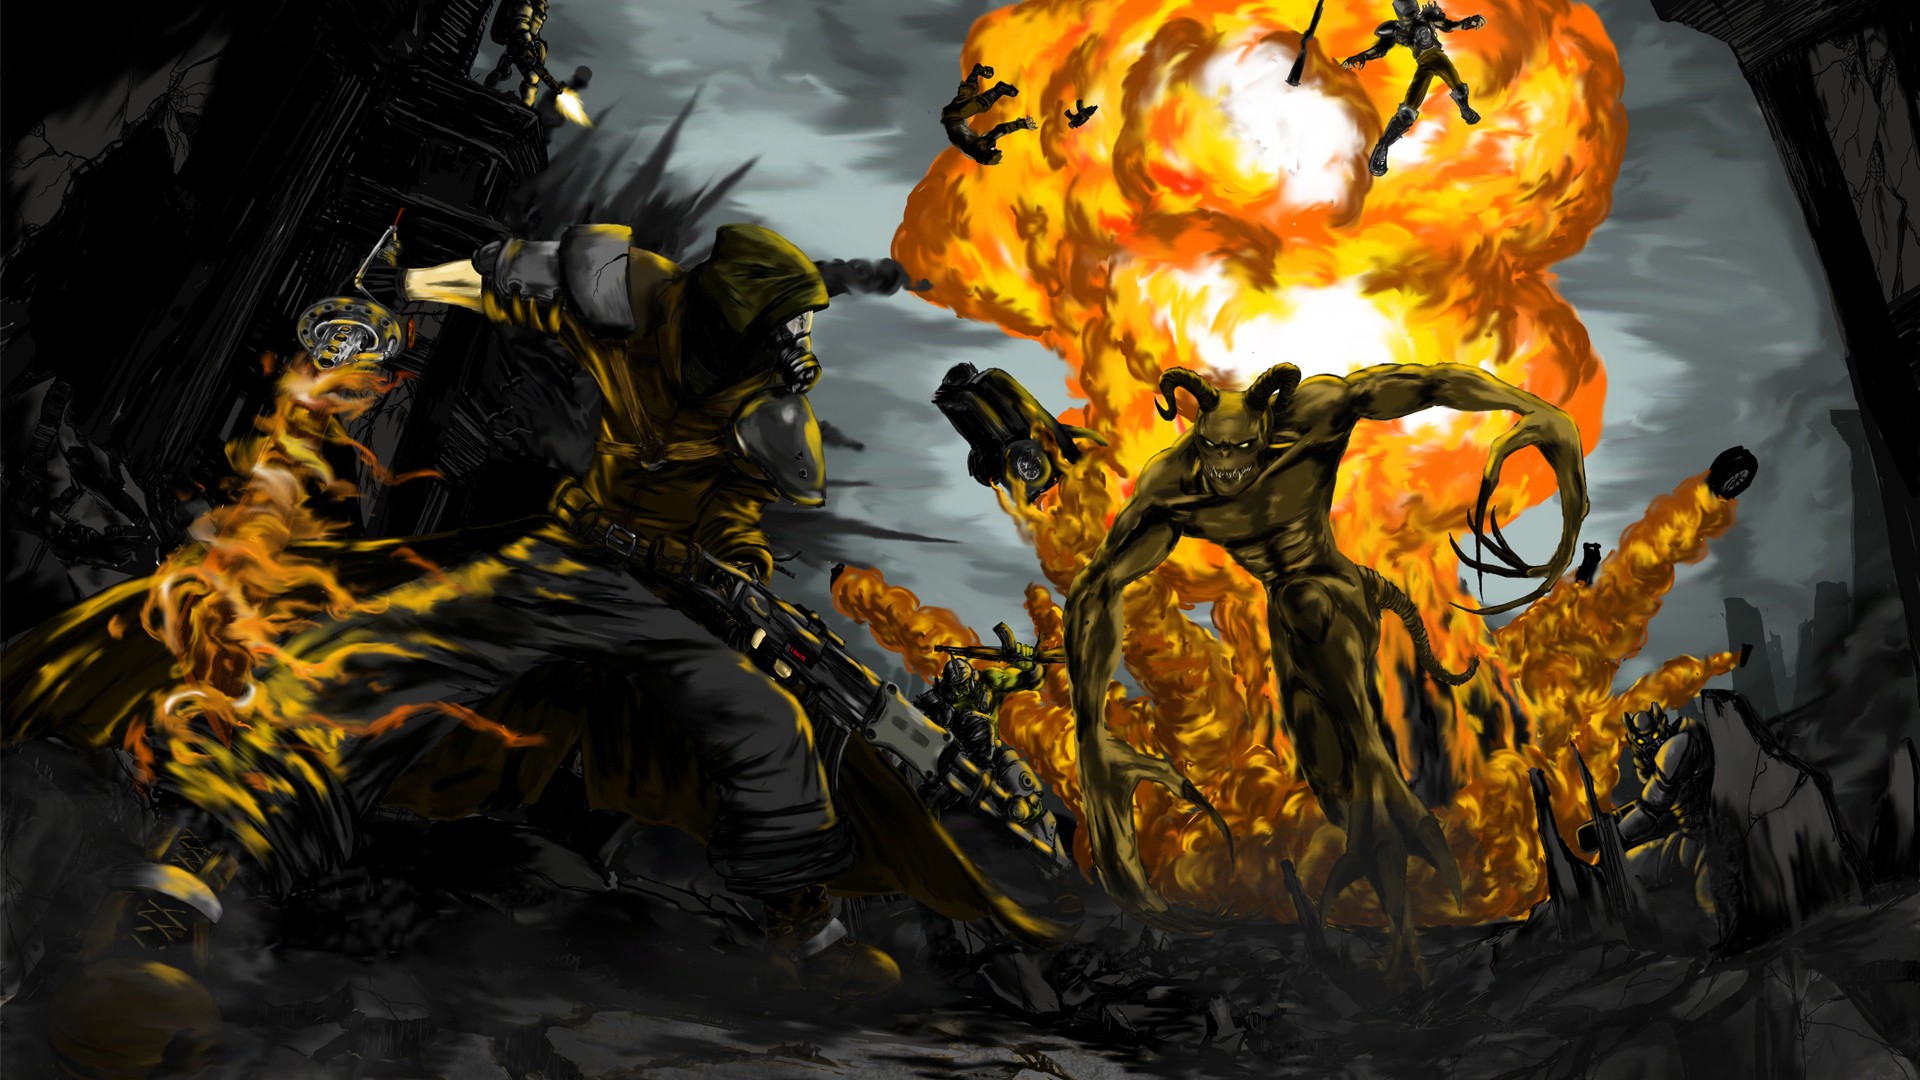 fallout 4 wallpaper 1920x1080,cg artwork,fictional character,fiction,demon,action adventure game